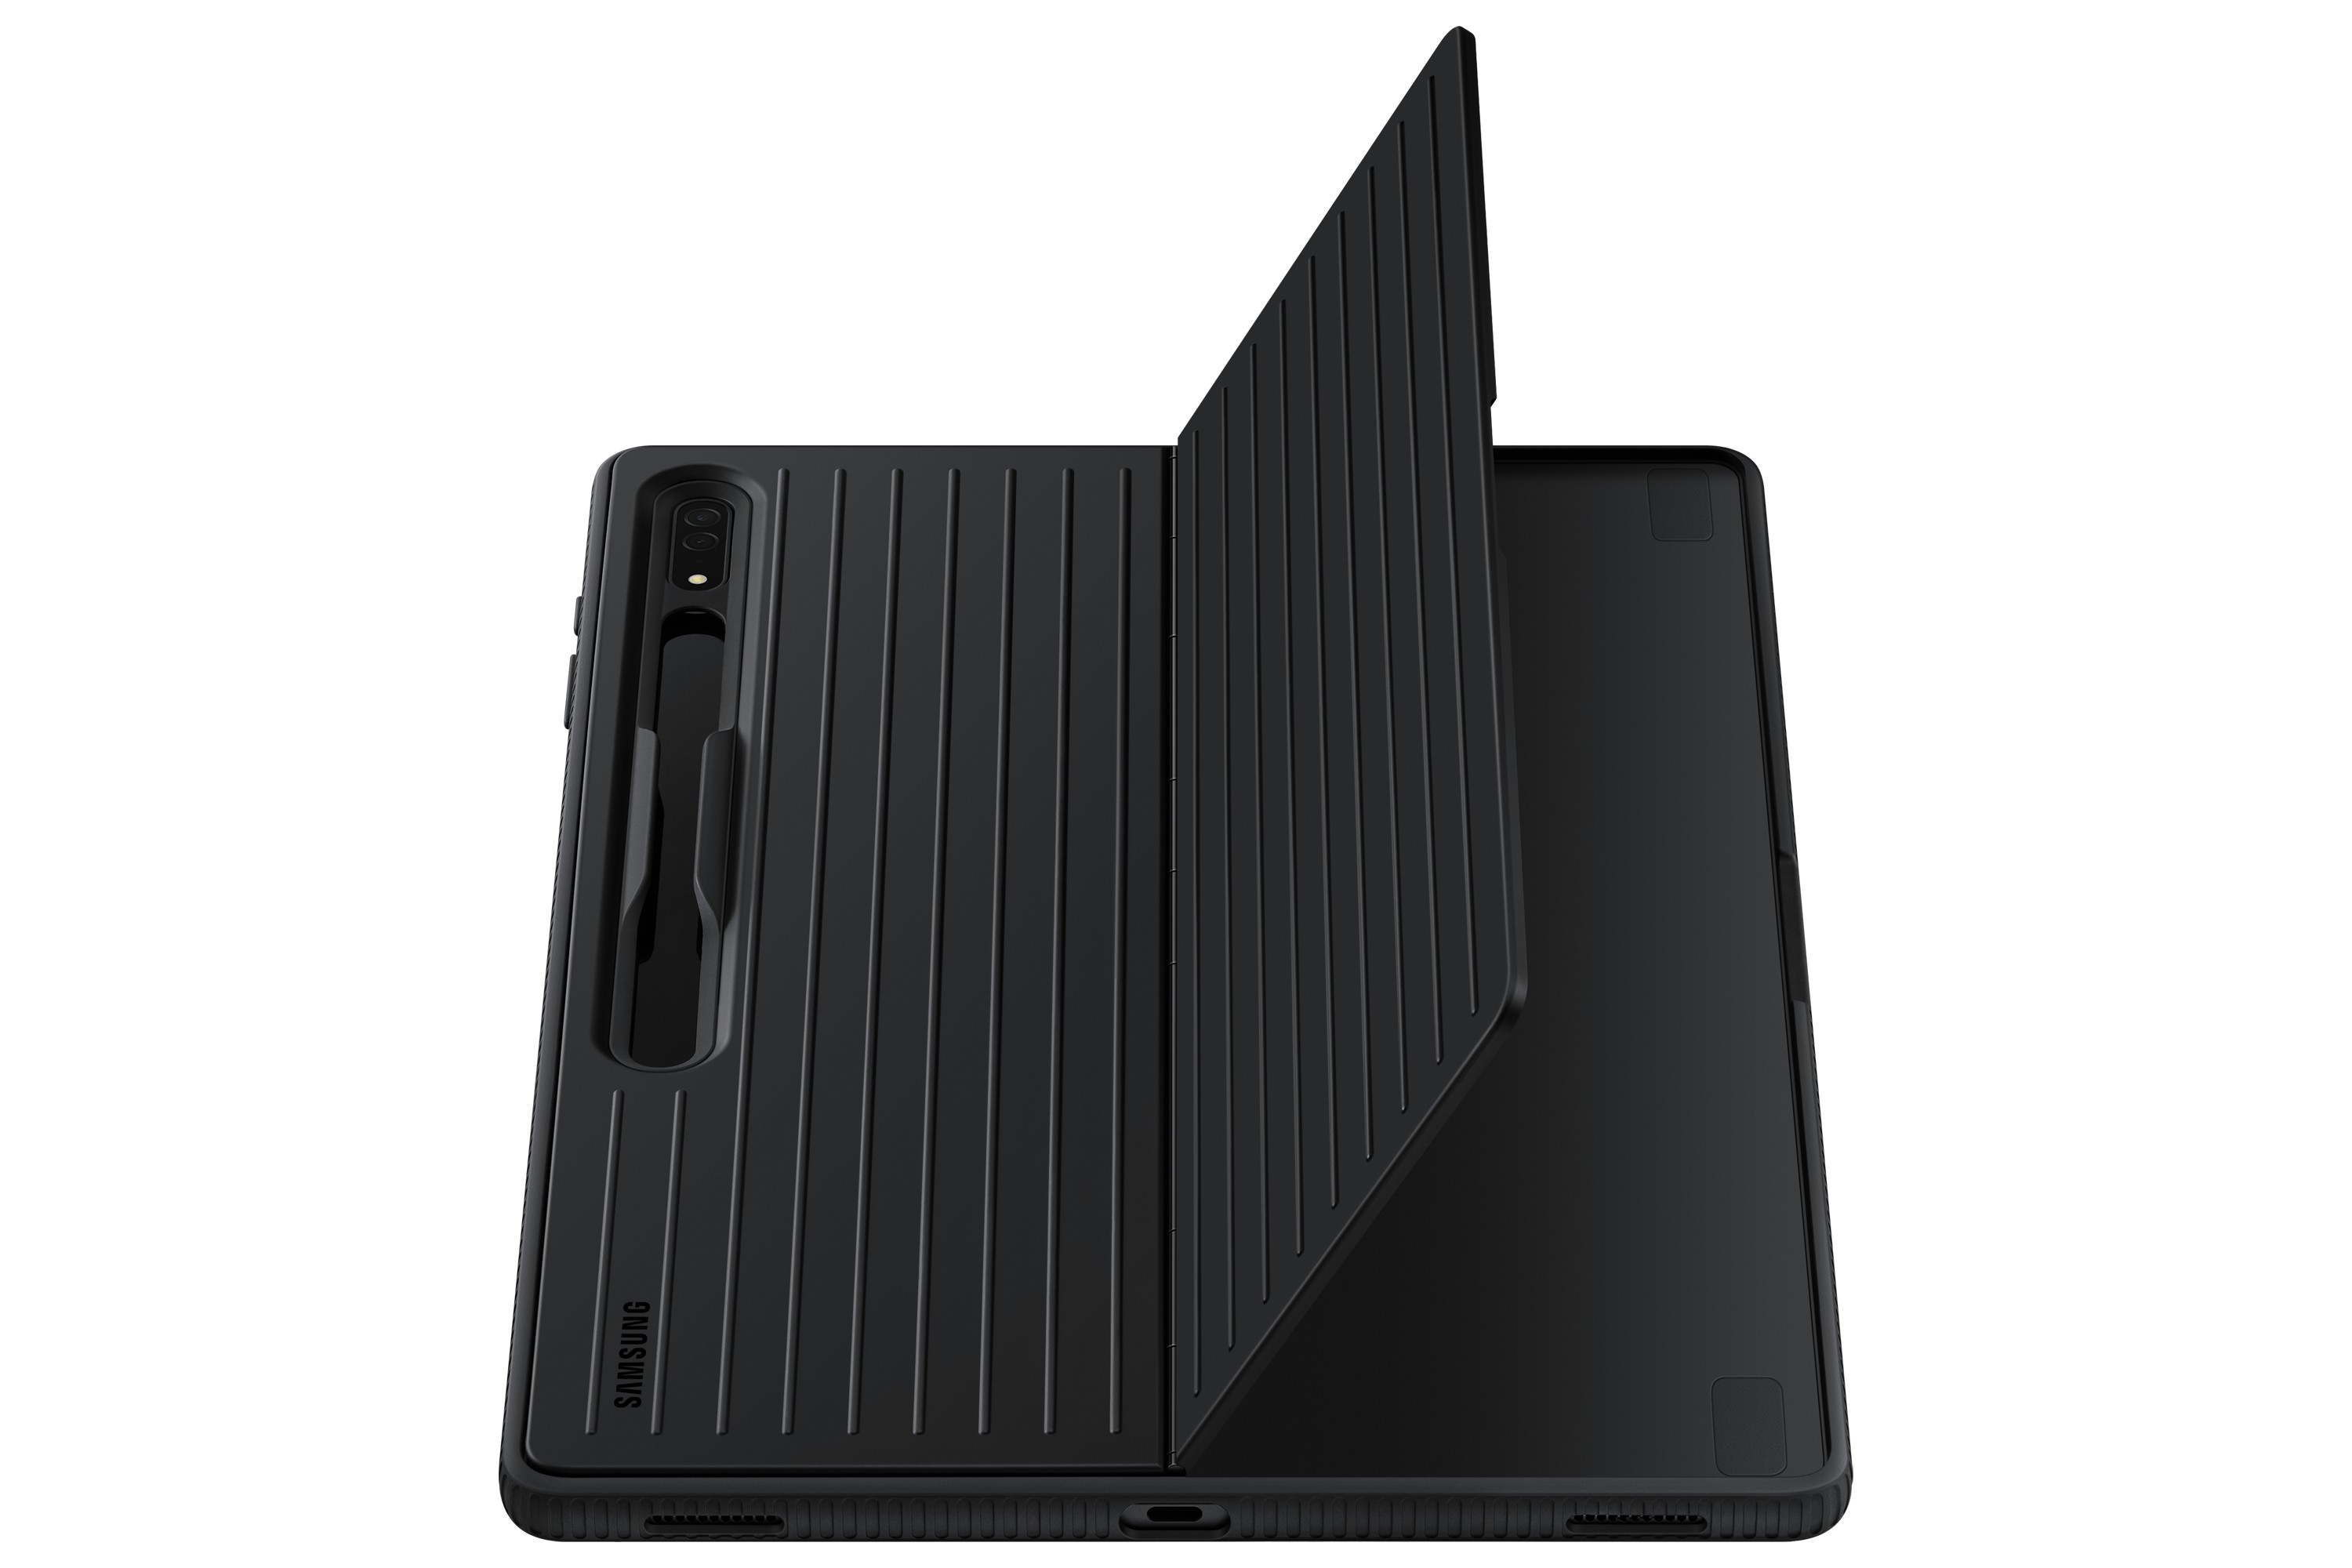 Pouzdro Protective Standing Cover pro Samsung Galaxy Tab S8 Plus, black